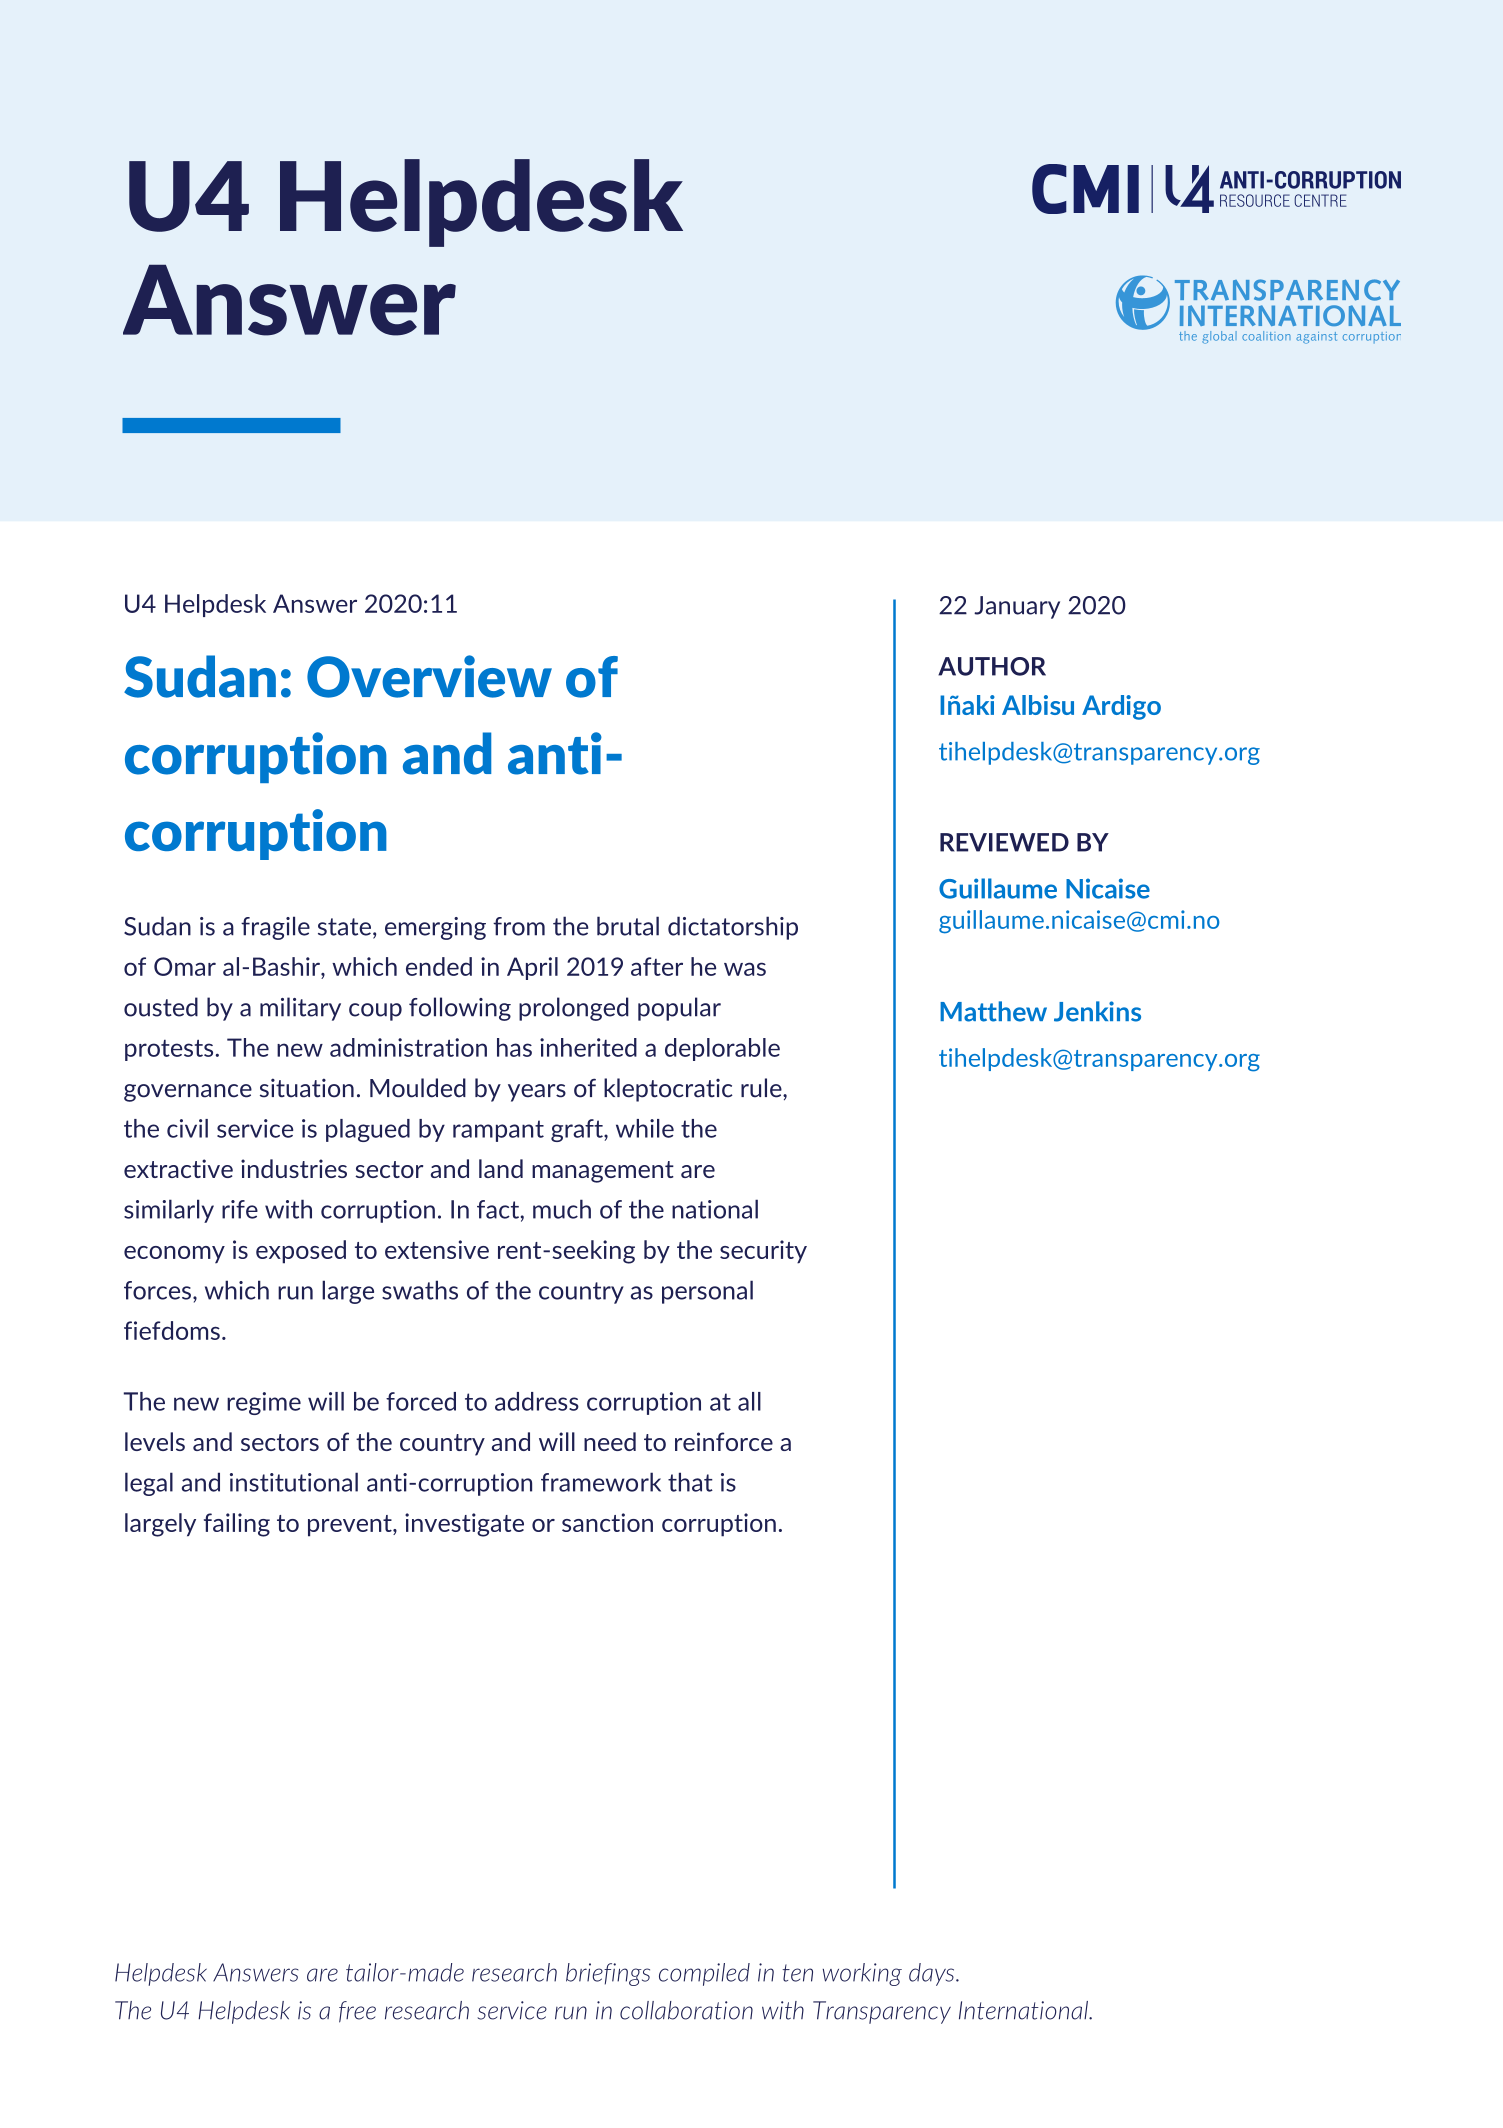 Sudan: Overview of corruption and anti-corruption 